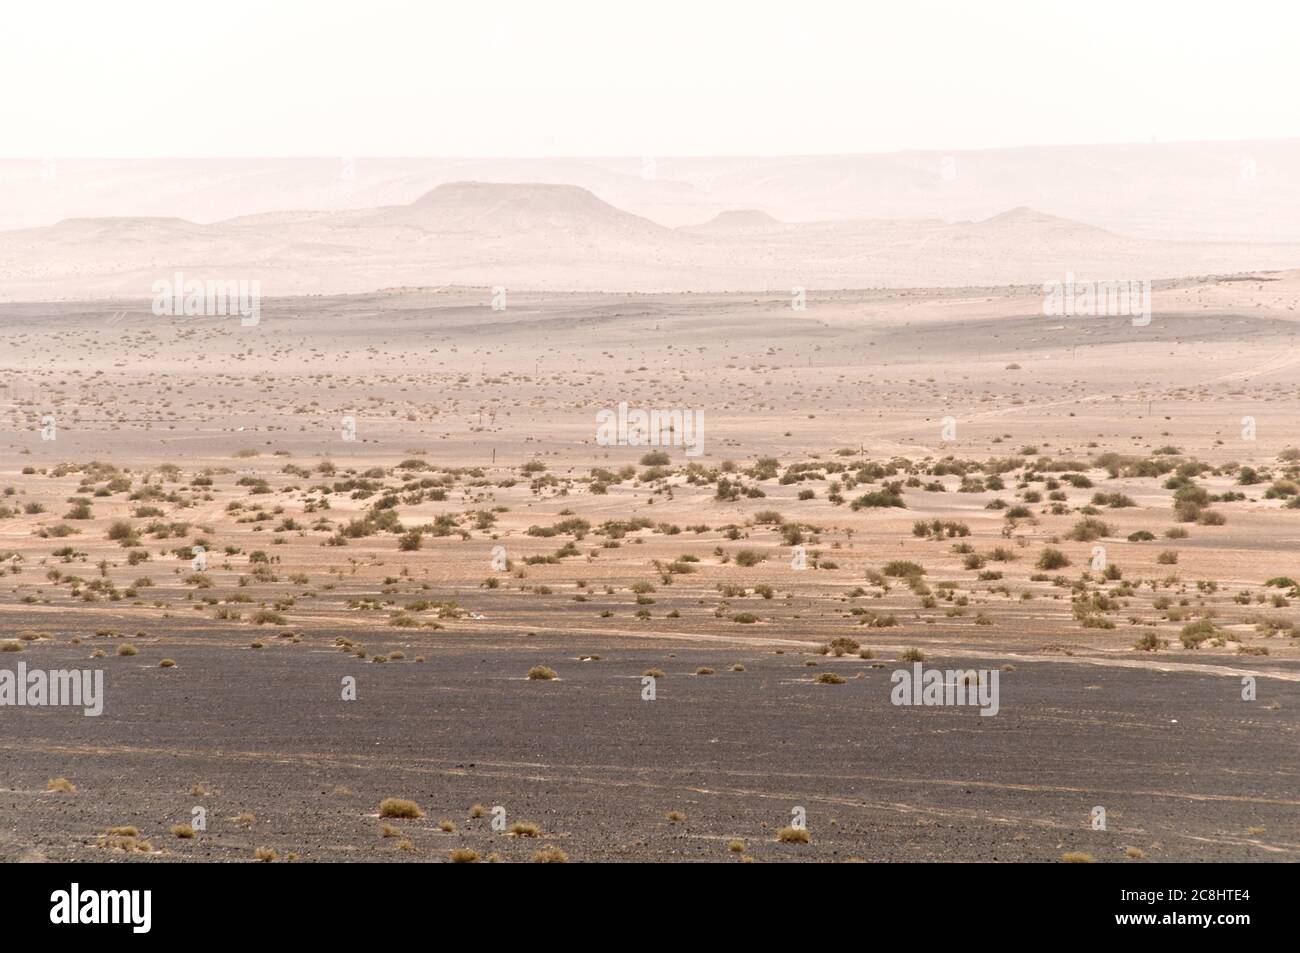 The Badia region of the desolate Jordanian eastern desert long the border of Saudi Arabia, near al-Omari, Jordan. Stock Photo